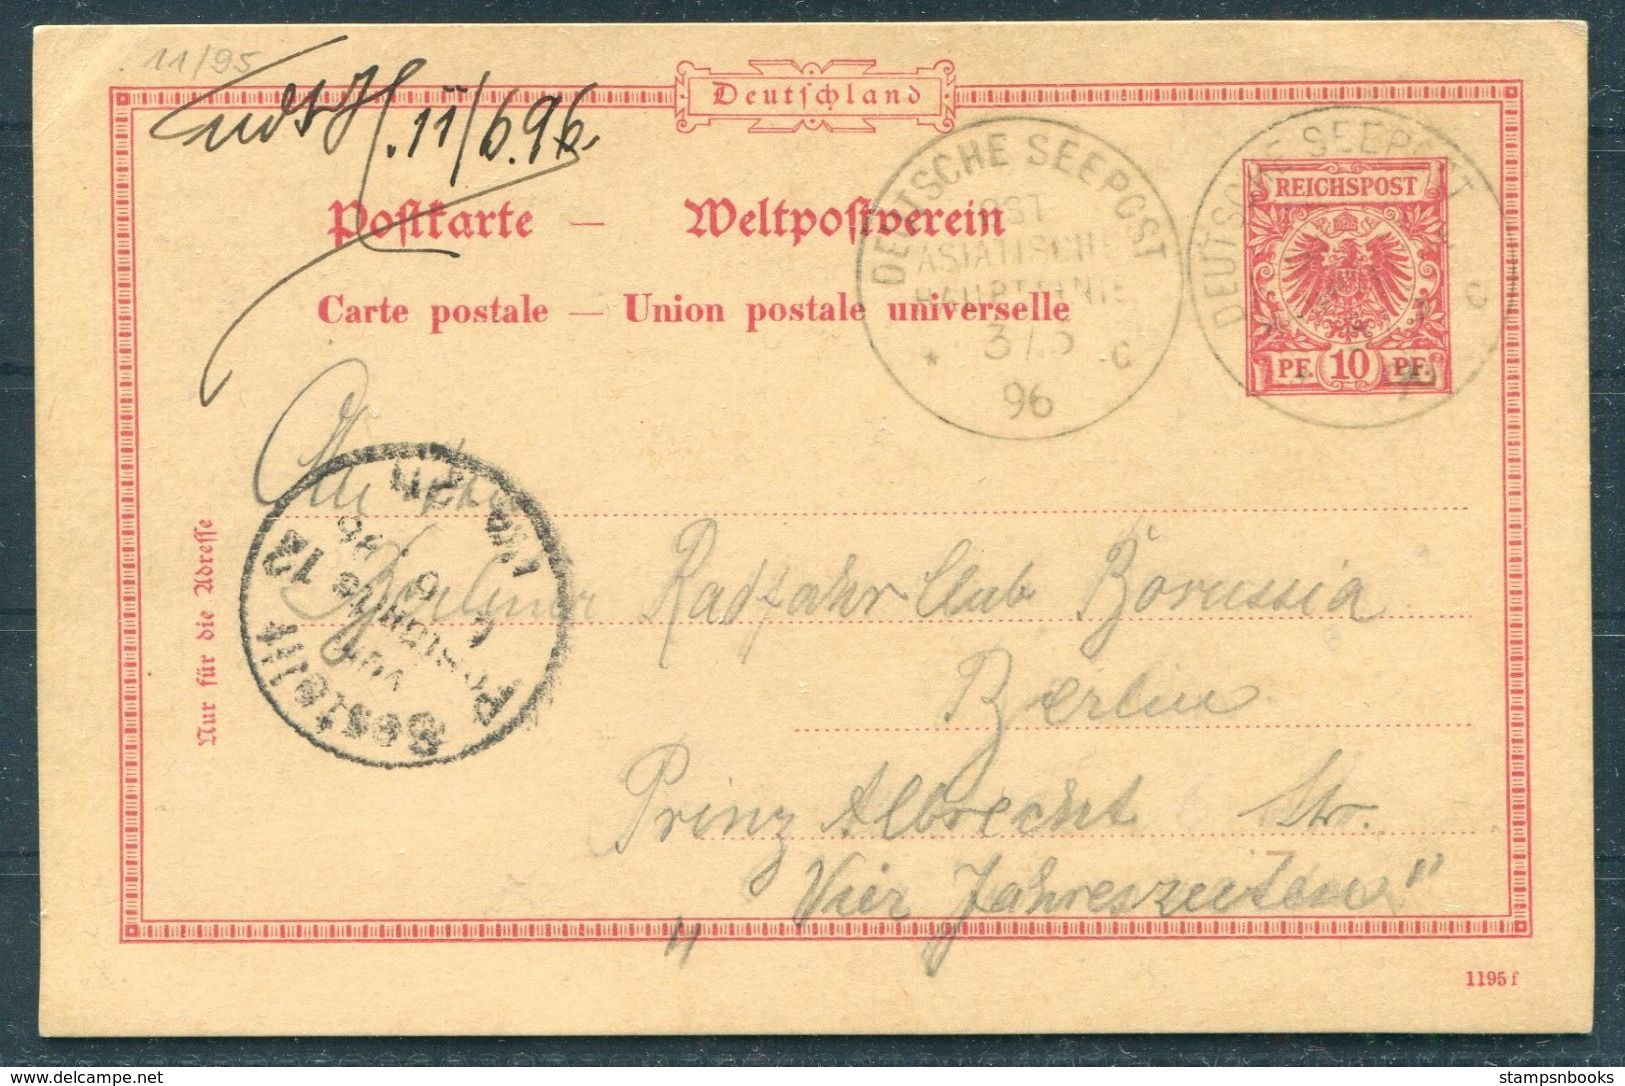 1896 China Germany Stationery Postcard, Deutsche Seepost - Berlin. Ship OSTASIATISCHE HAUBTLINIE - Covers & Documents